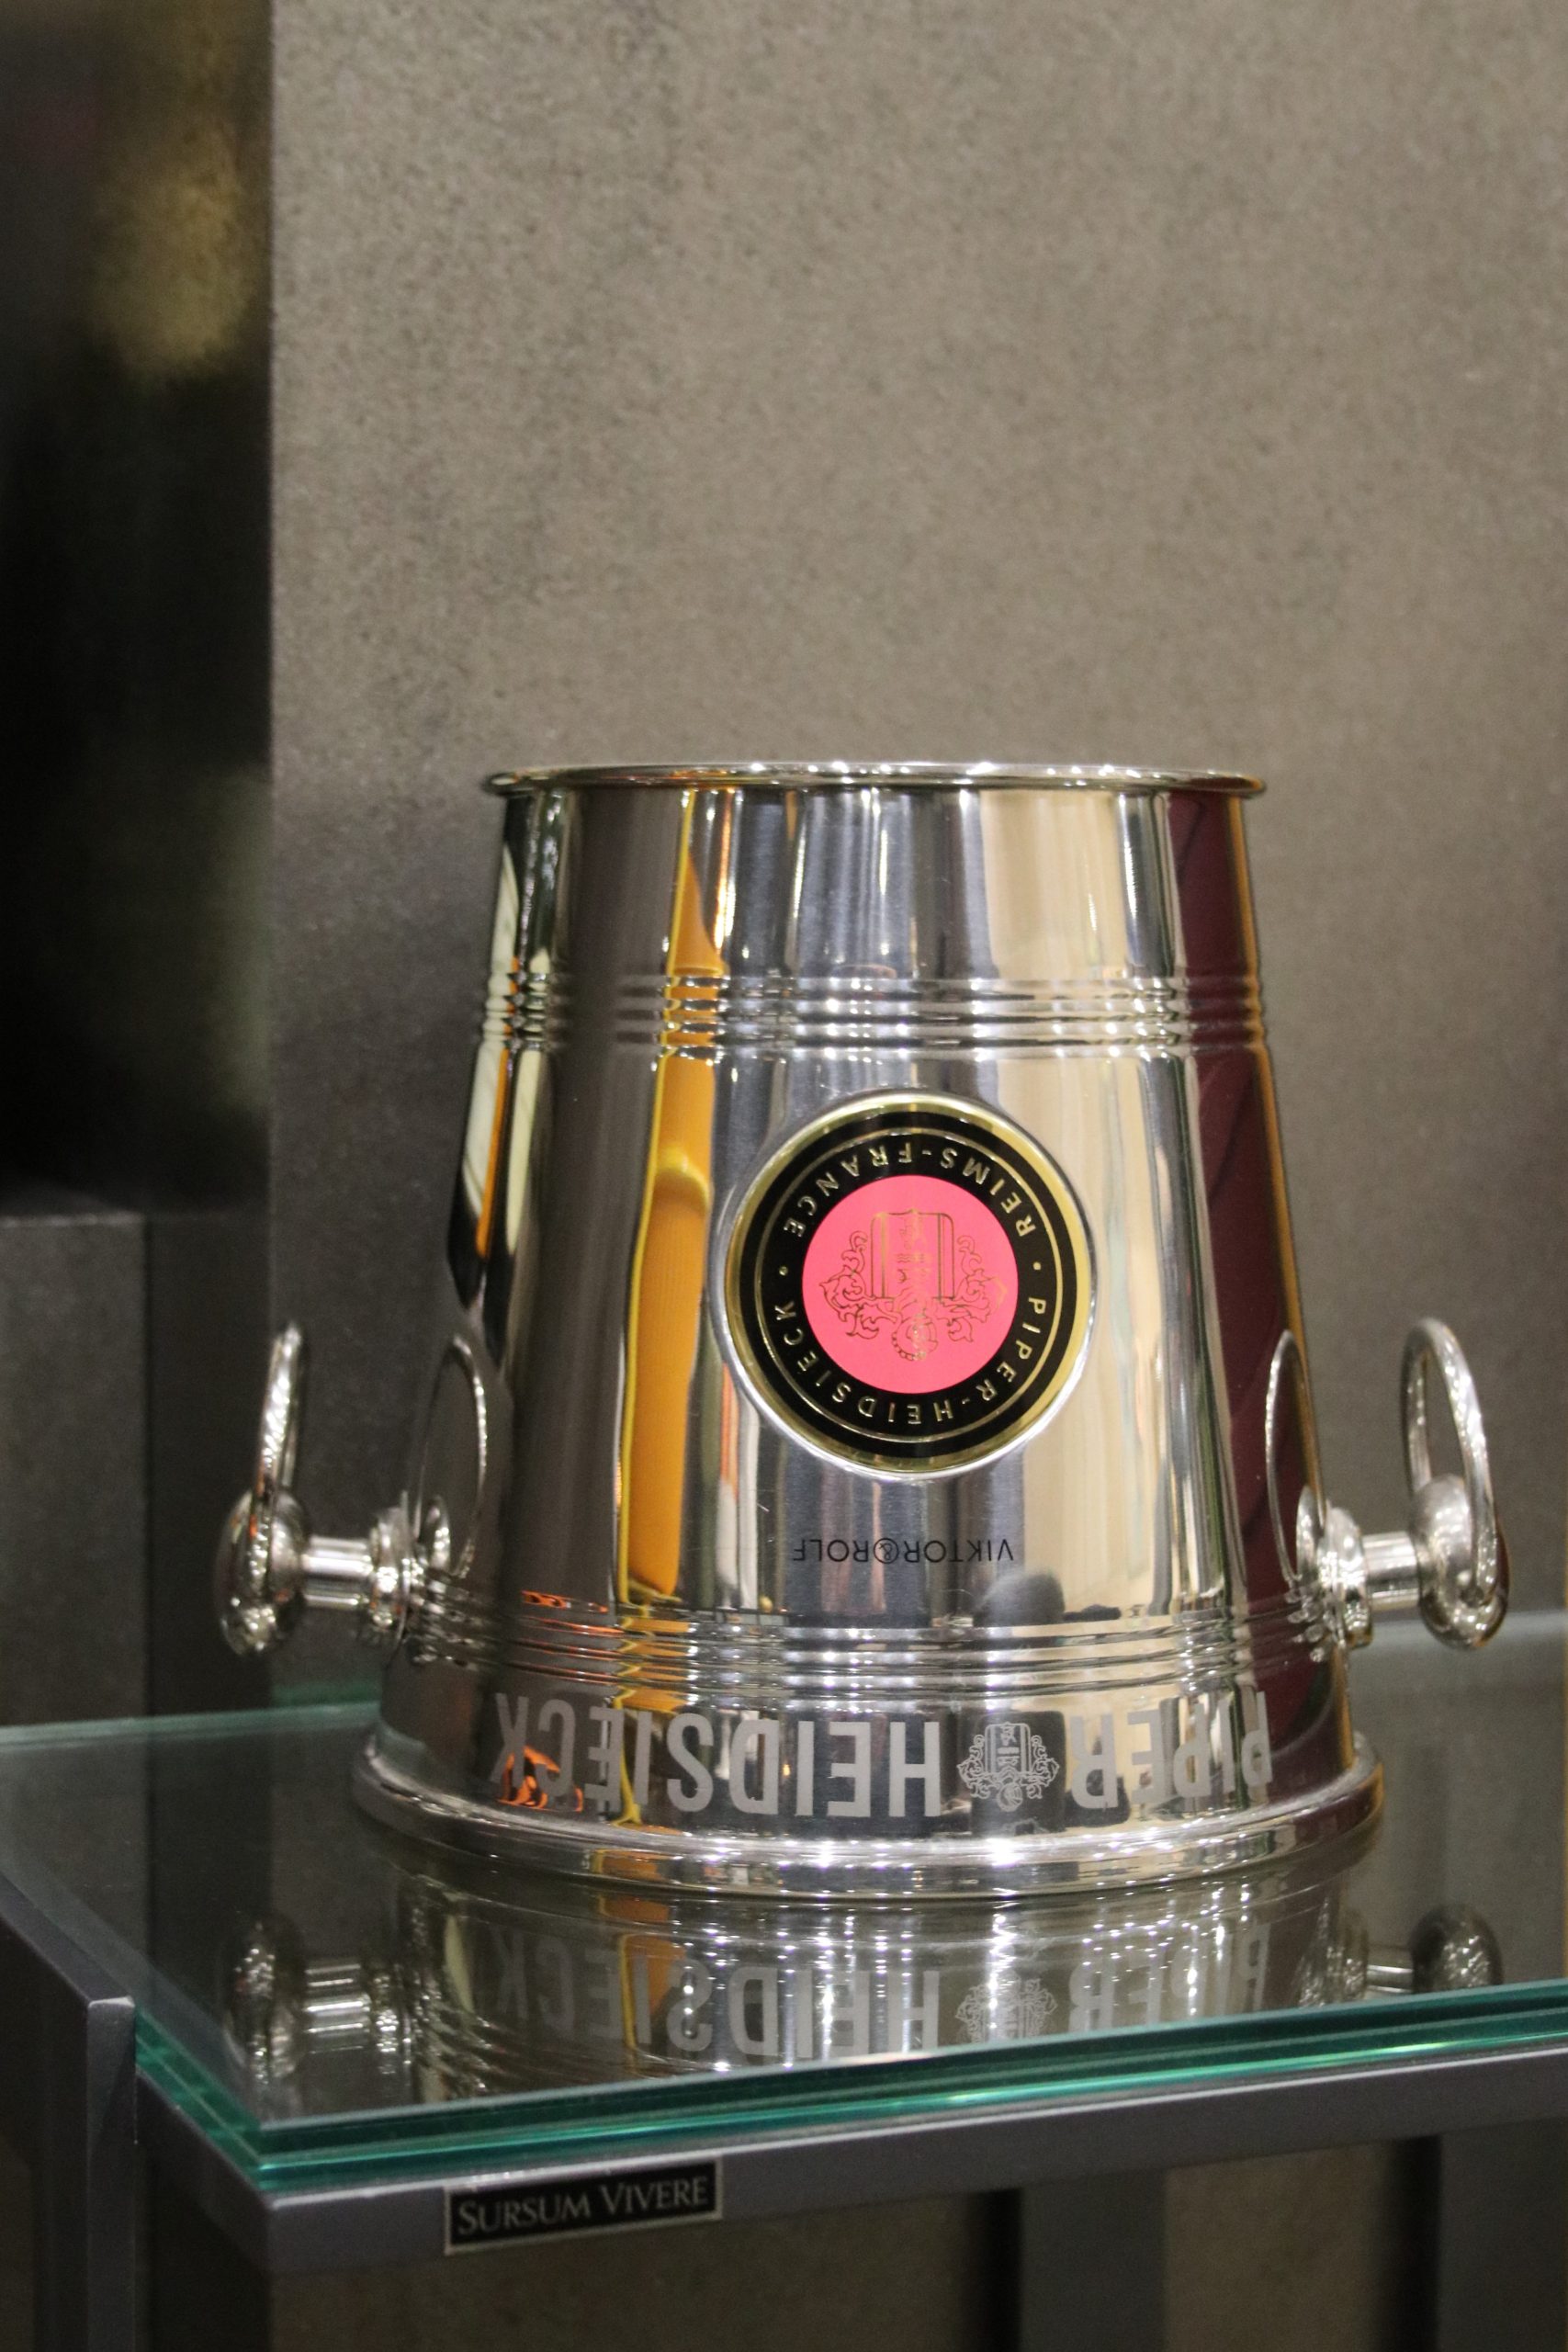 Piper-Heidsieck Champagne Viktor & Rolf Upside Down pezsgőhűtő jégveder 2007 Limited Edition – 64.500.-Ft